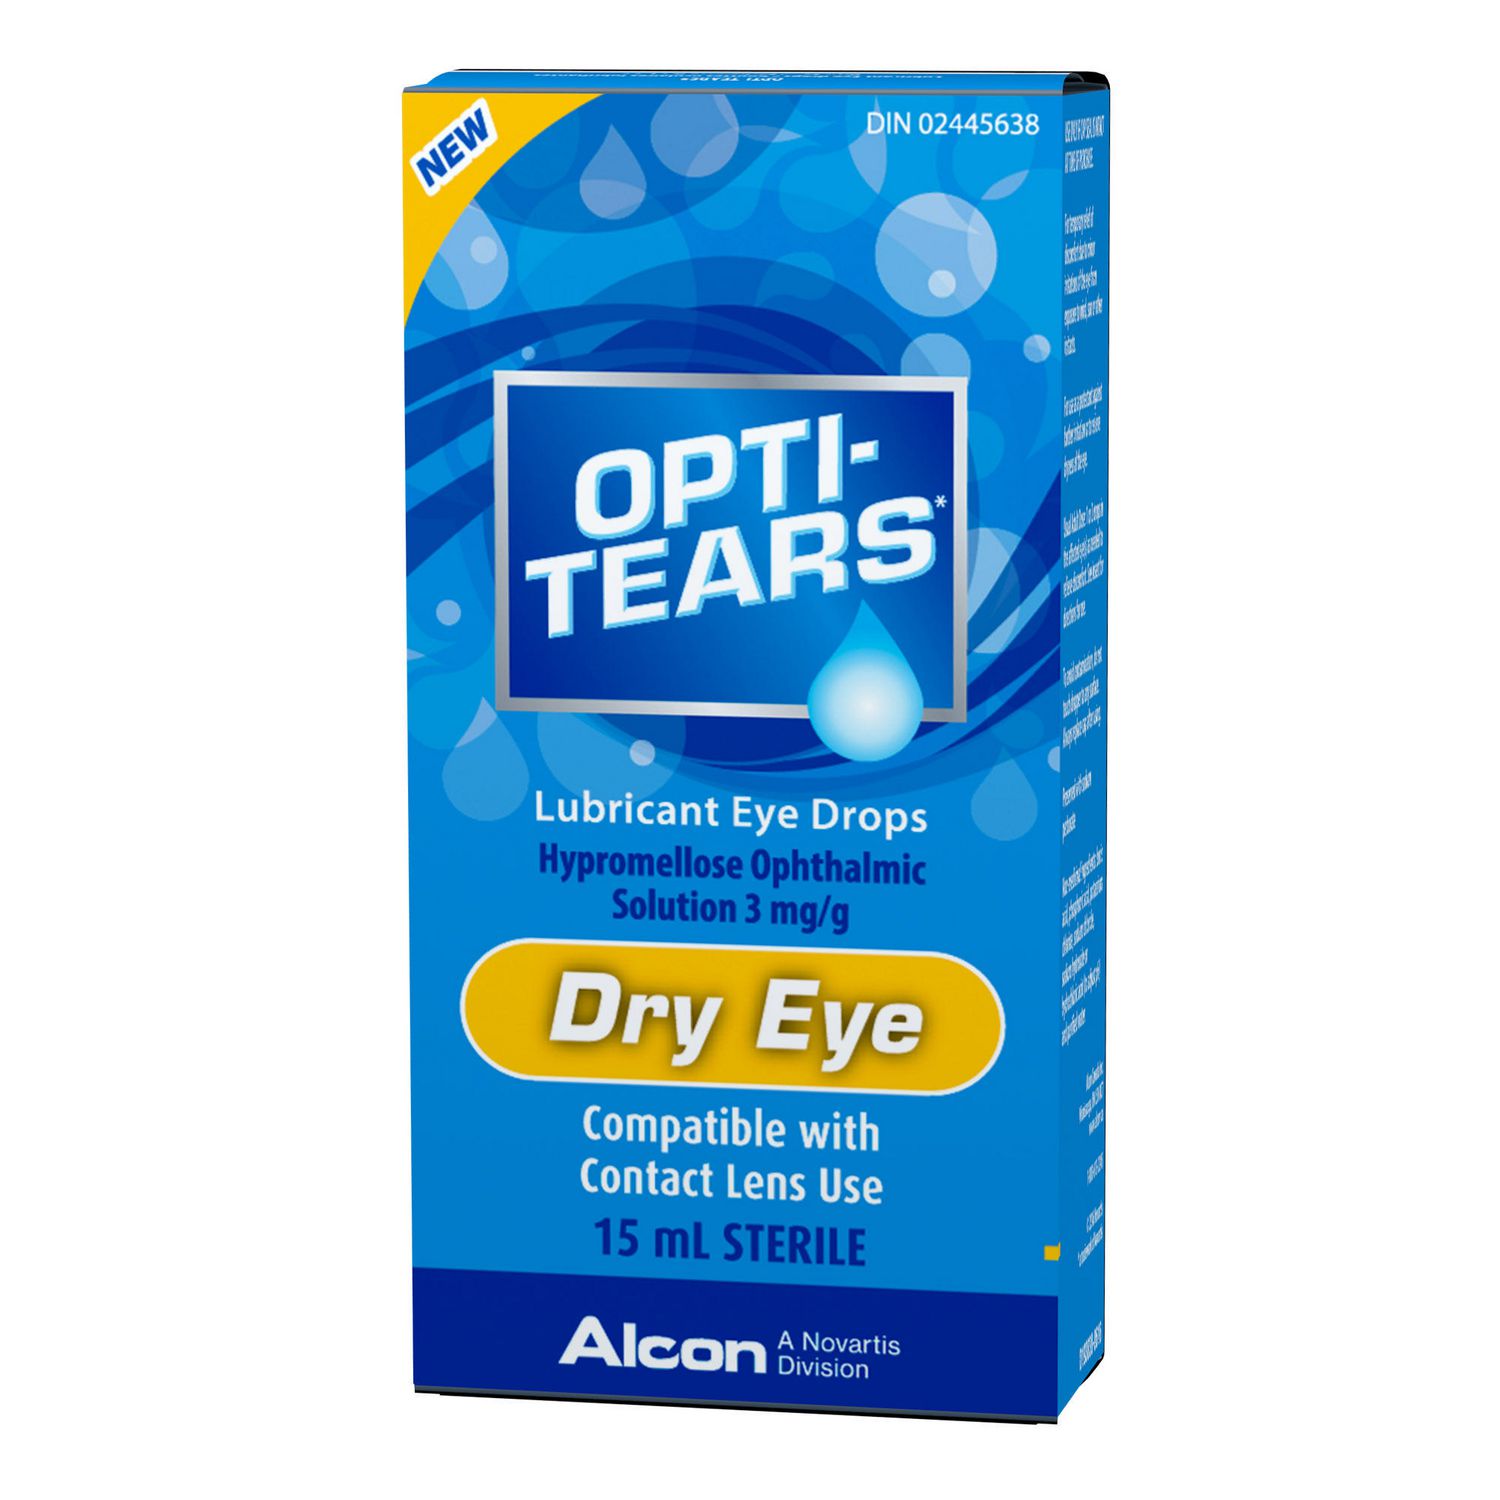 OptiTears Dry Eye Drops Walmart Canada